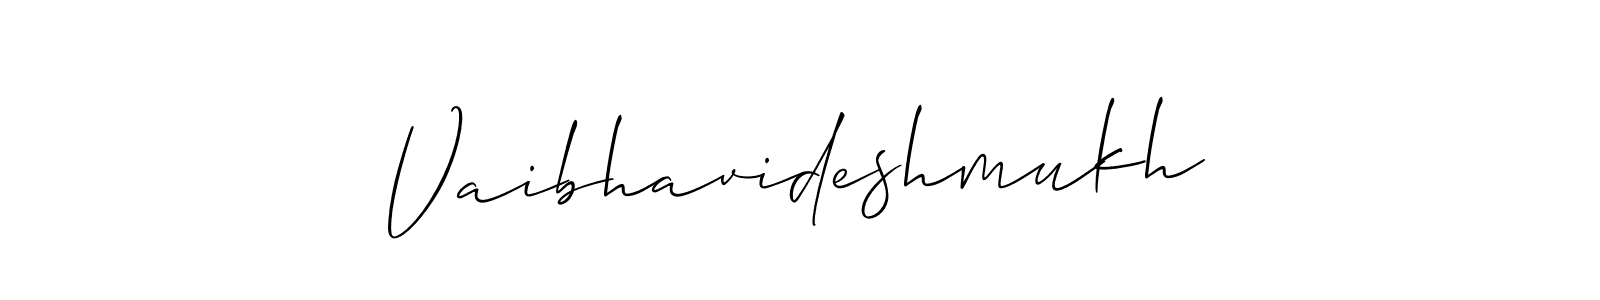 How to make Vaibhavideshmukh signature? Allison_Script is a professional autograph style. Create handwritten signature for Vaibhavideshmukh name. Vaibhavideshmukh signature style 2 images and pictures png